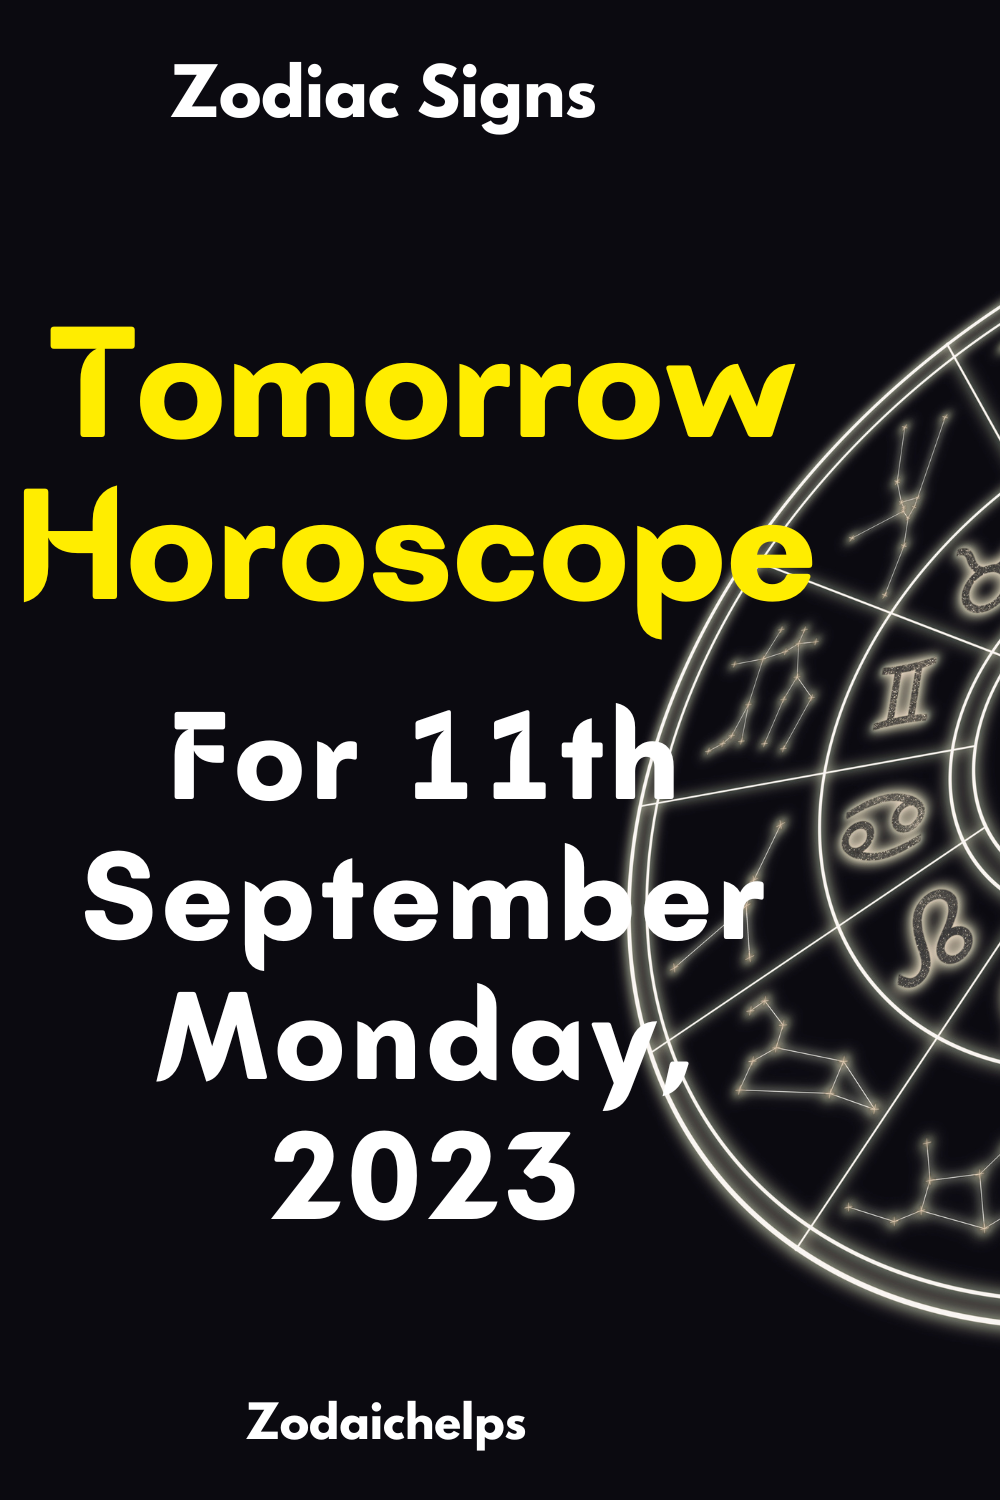 Tomorrow Horoscope for 11th September Monday, 2023